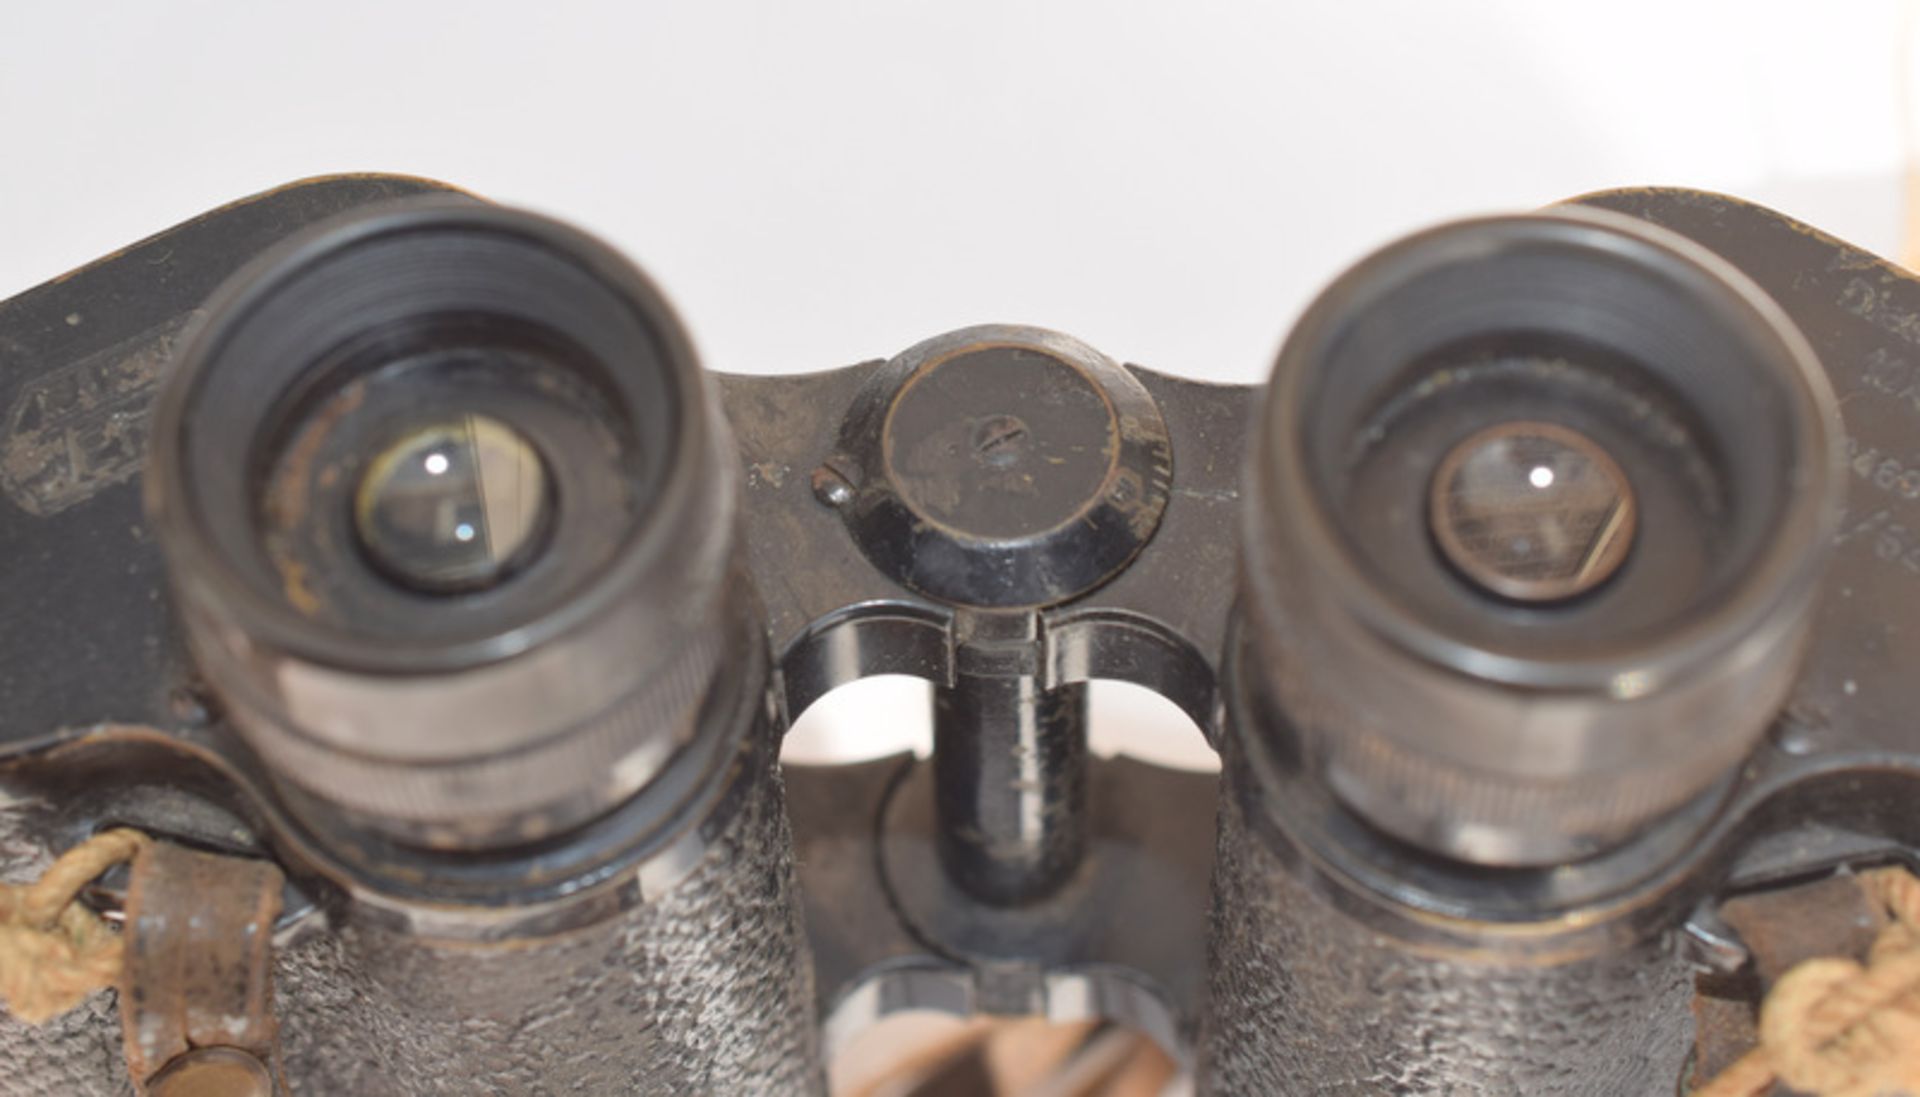 Dienstglas MkM German Military Binoculars WW2 18X50 With Leather Case - Image 3 of 8